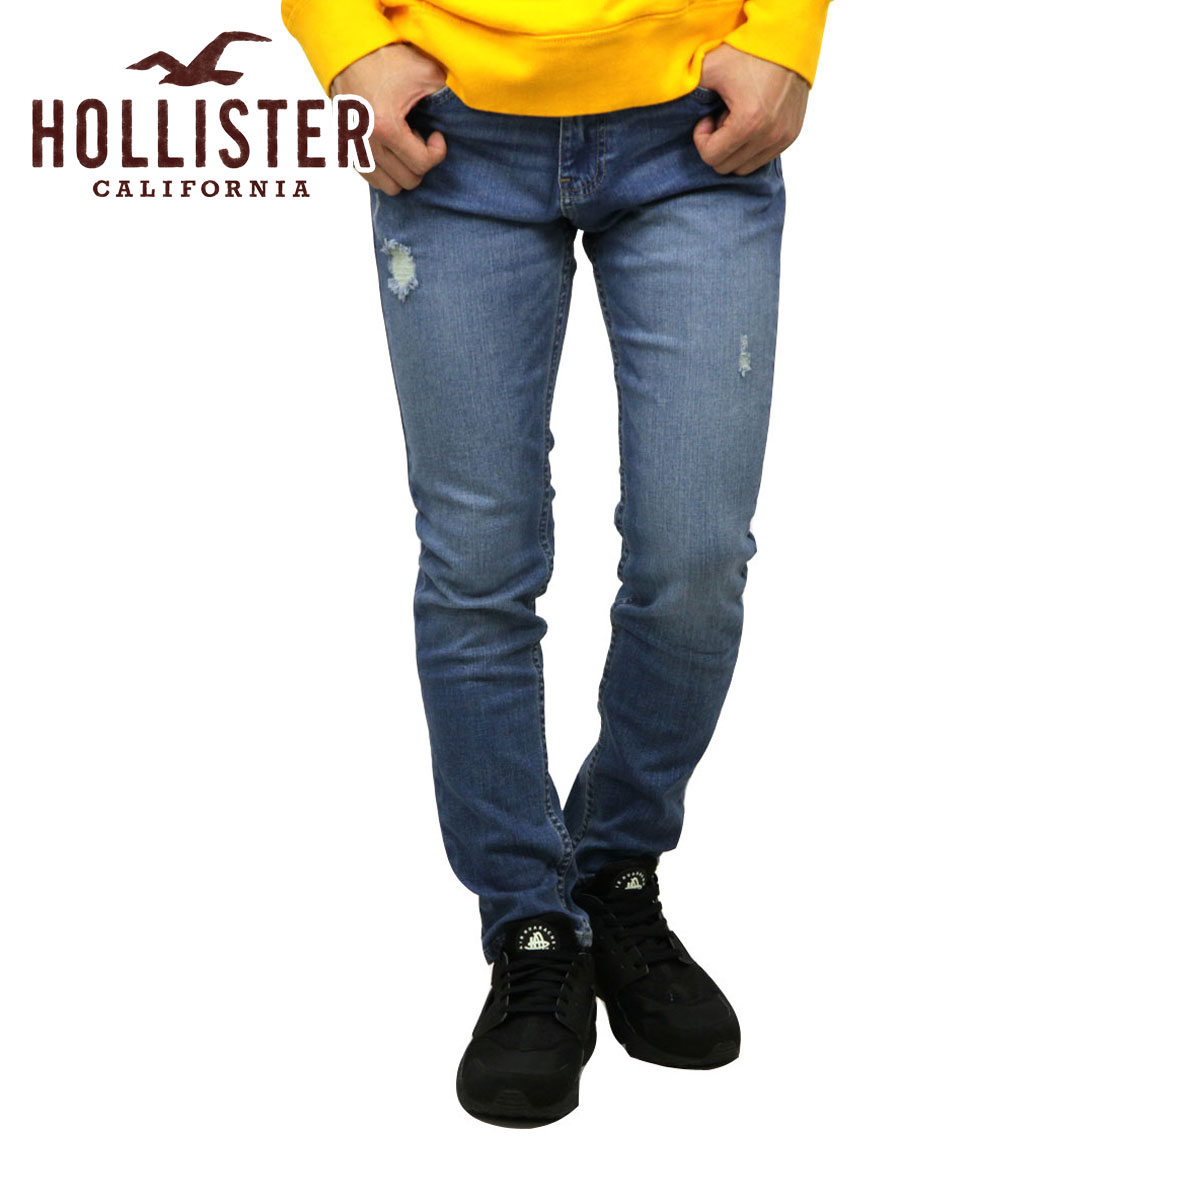 Hollister Womens Pants Size Chart